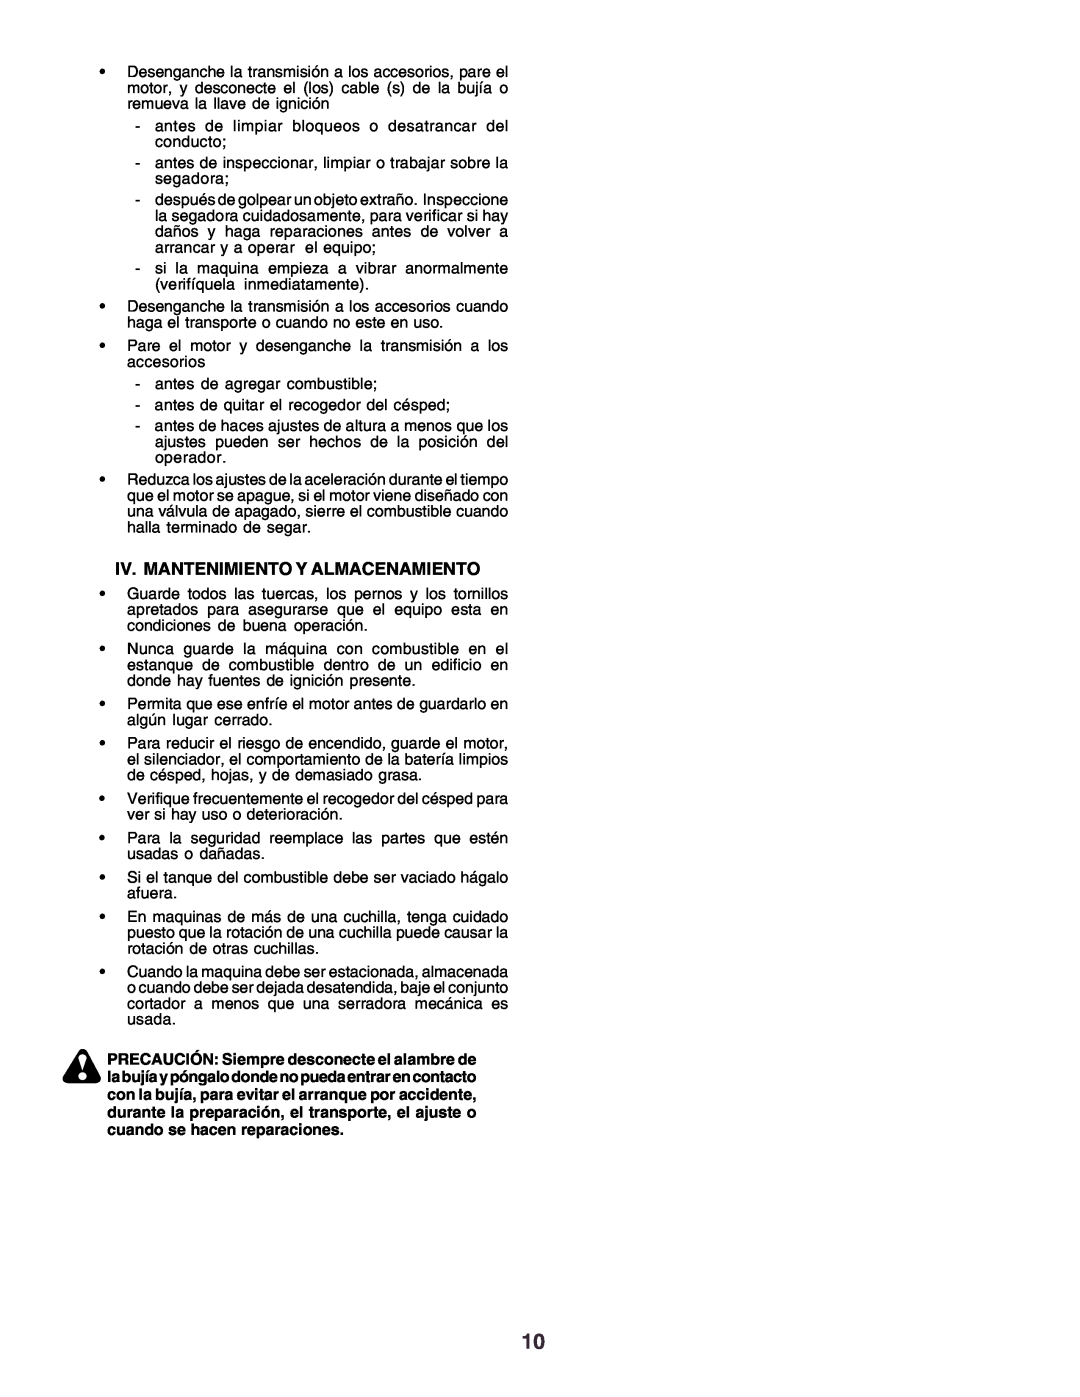 Husqvarna YTH170 instruction manual Iv. Mantenimiento Y Almacenamiento 